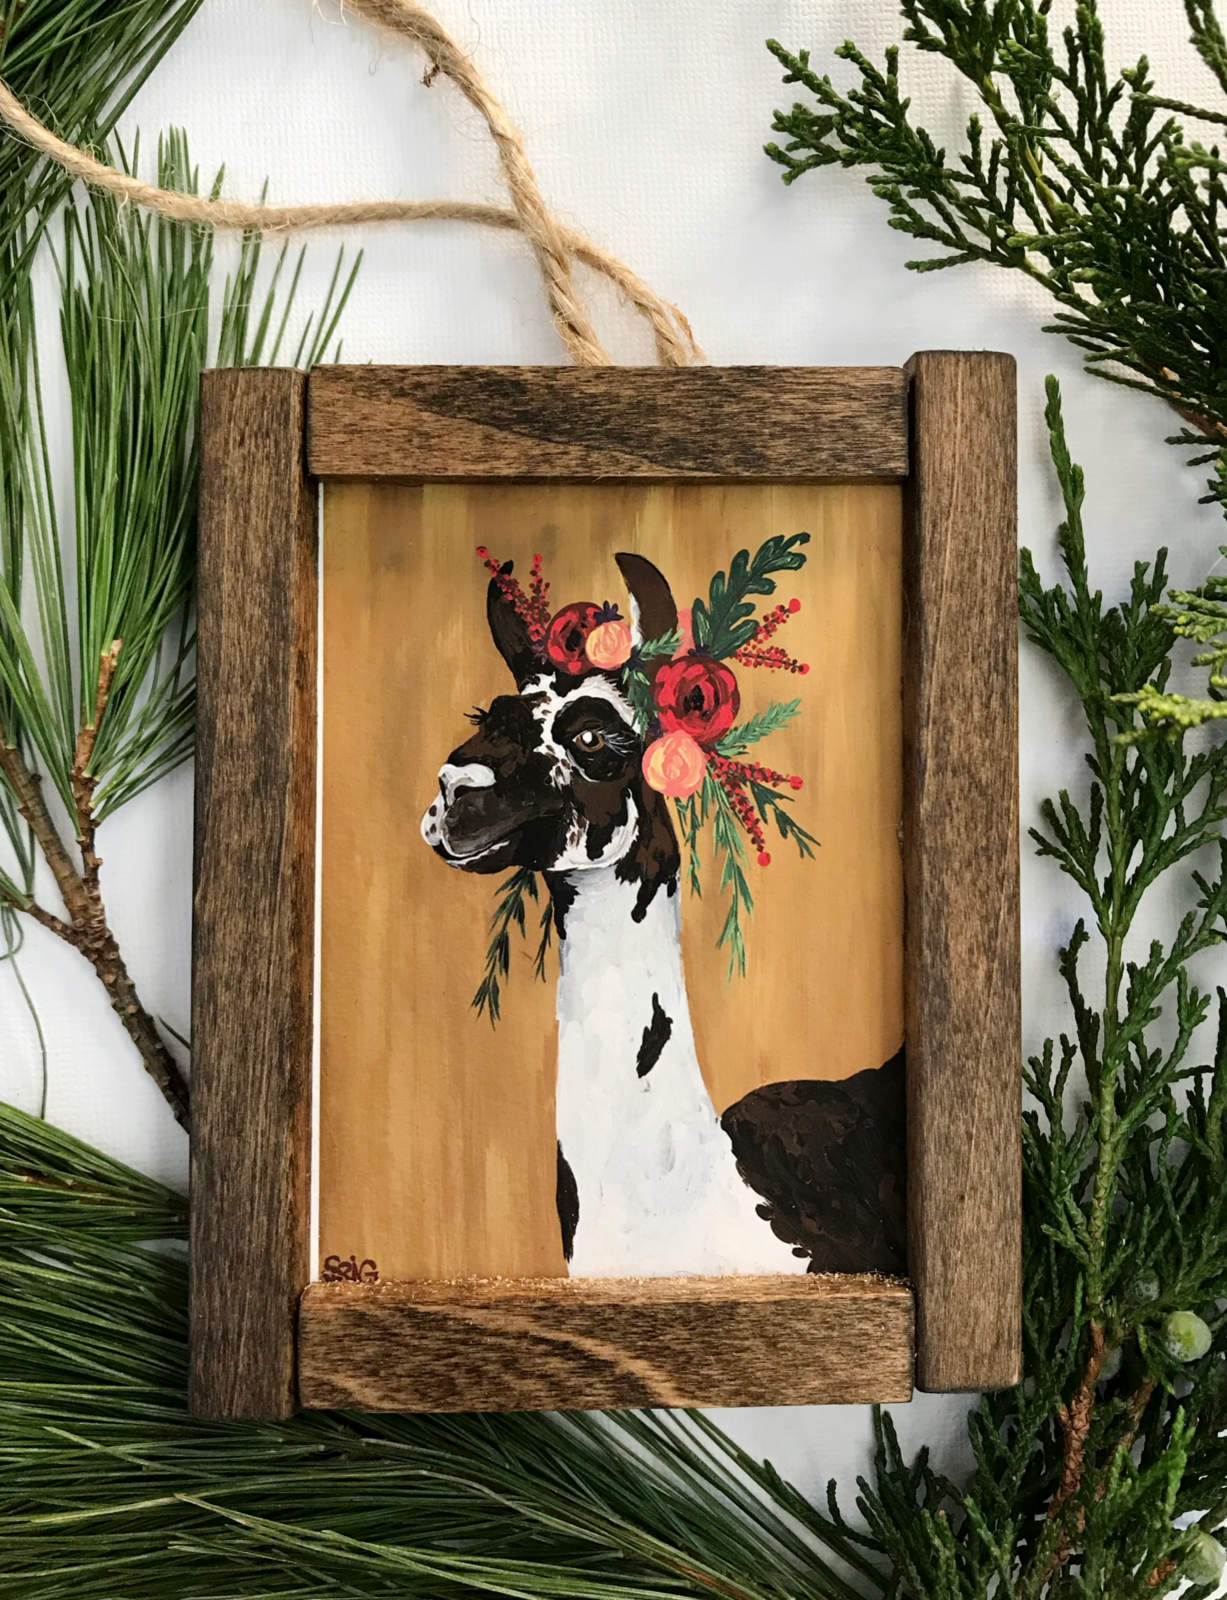 lana mini giclée framed ornament - Spring Whitaker